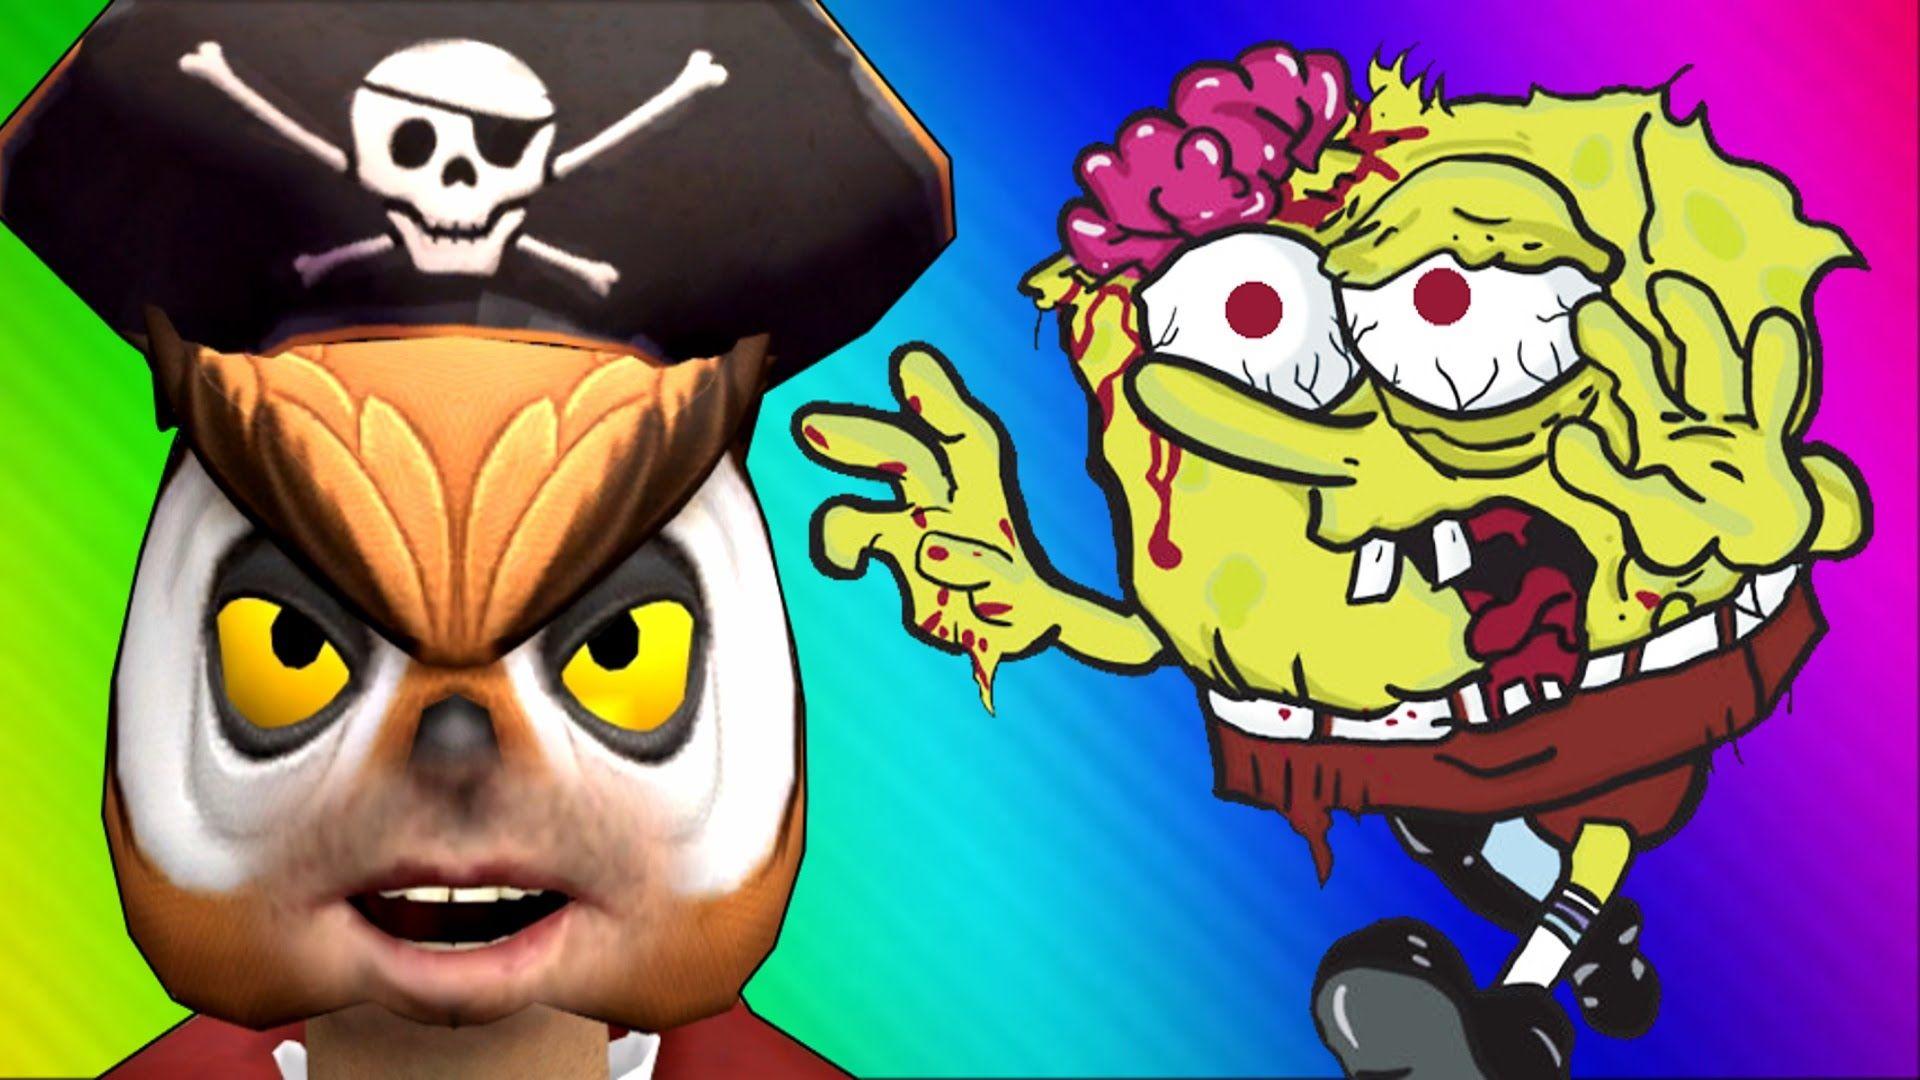 Songs in "Spongebob Zombies! Call of Duty WaW Zombies Custom Maps